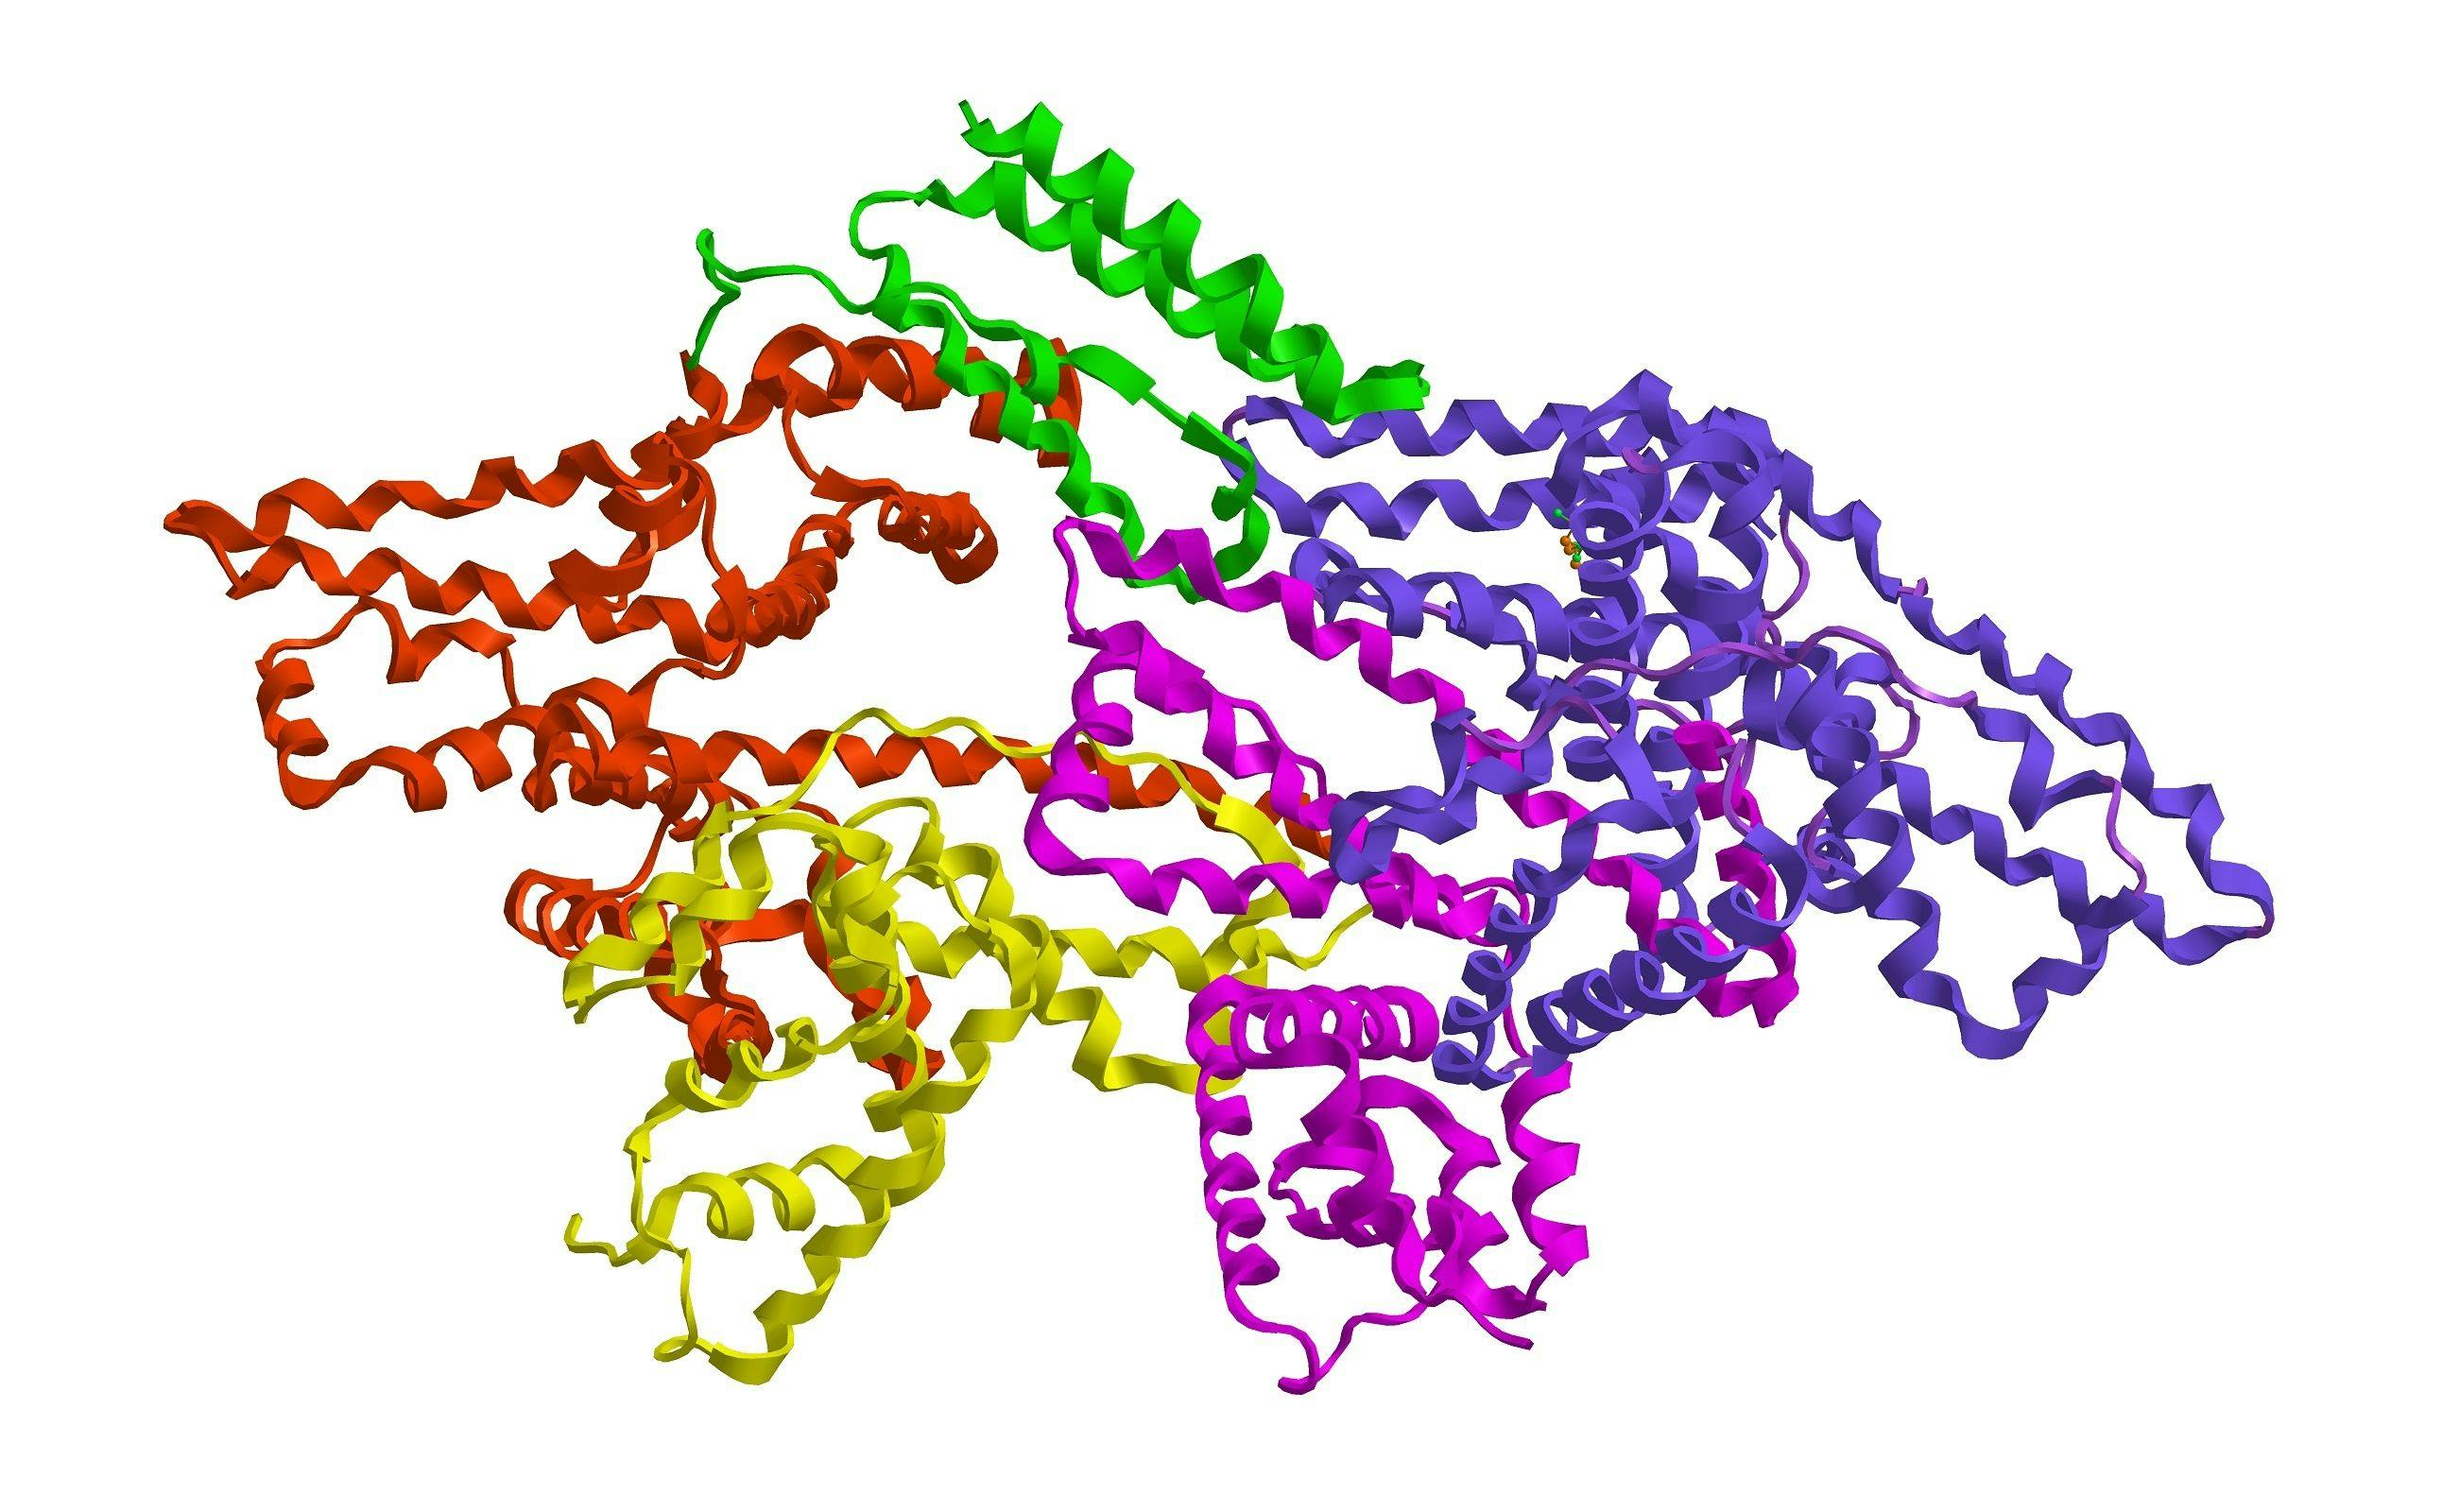 Molecular structure of Bovine serum albumin (BSA) | Image Credit: © raimund14 - stock.adobe.com